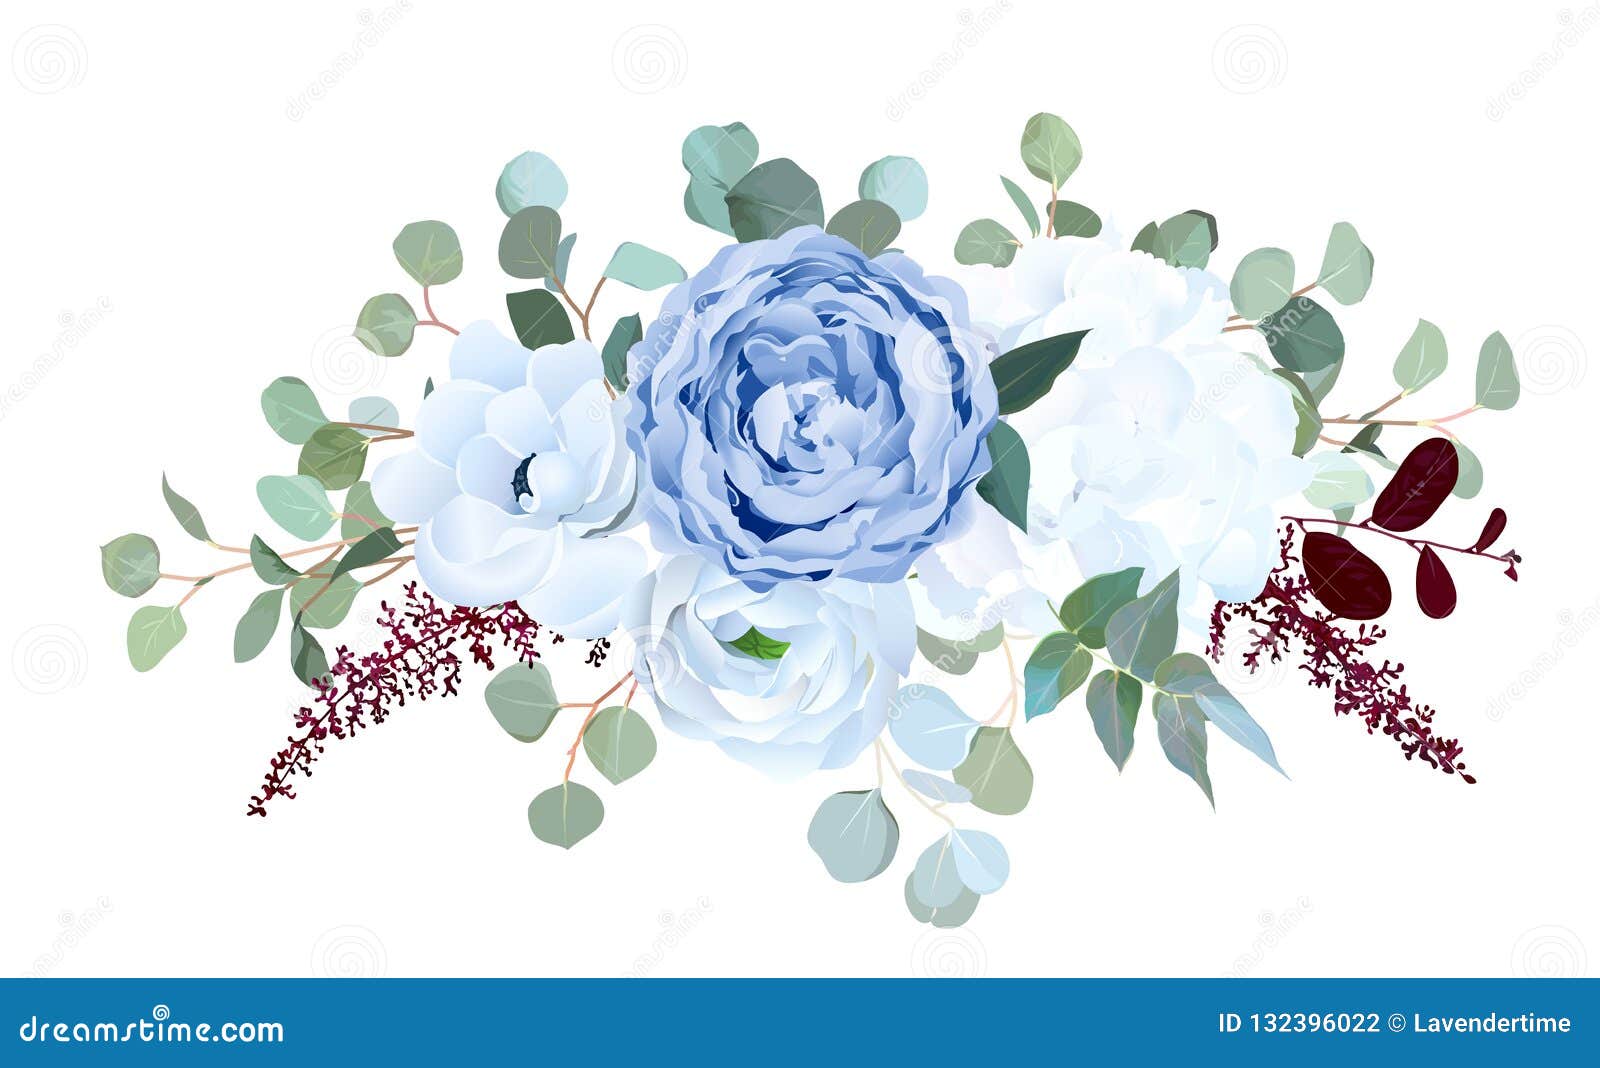 dusty blue rose, white hydrangea, ranunculus, anemone, eucalyptus